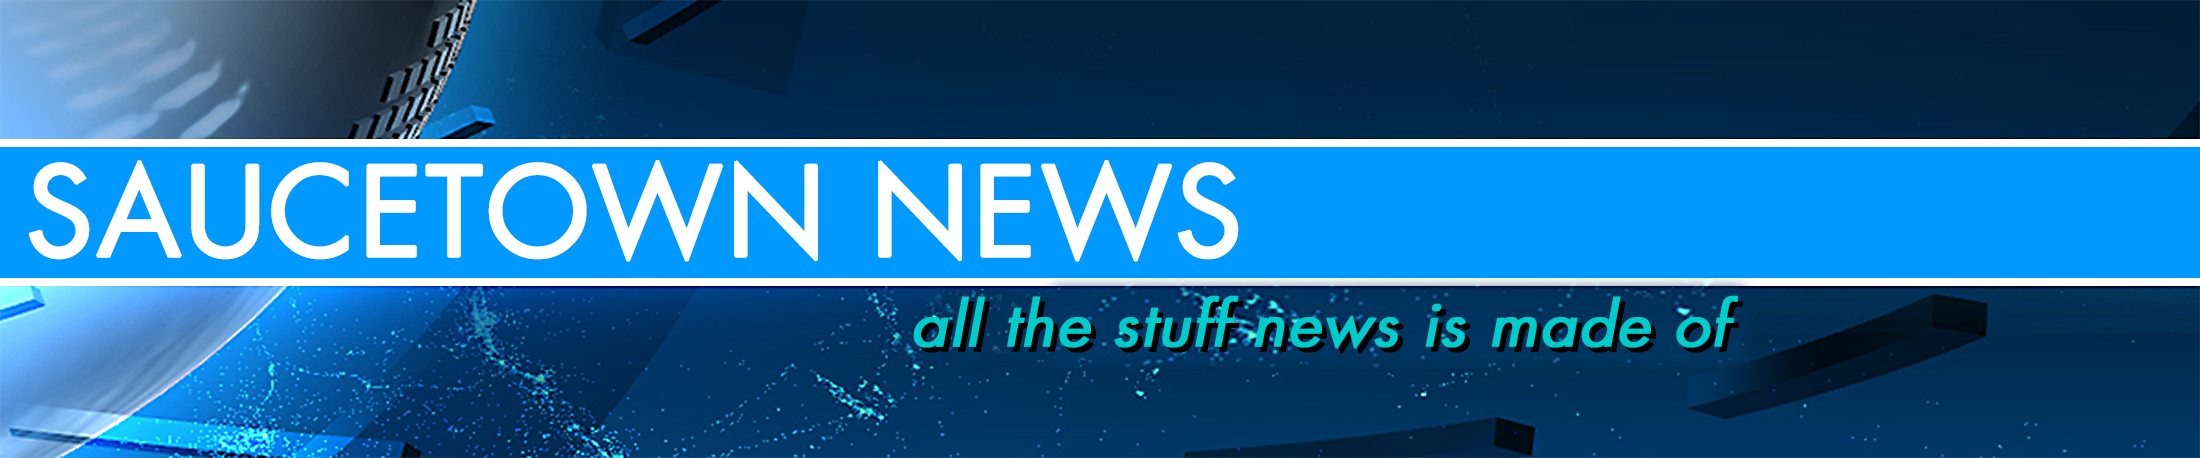 Saucetown News